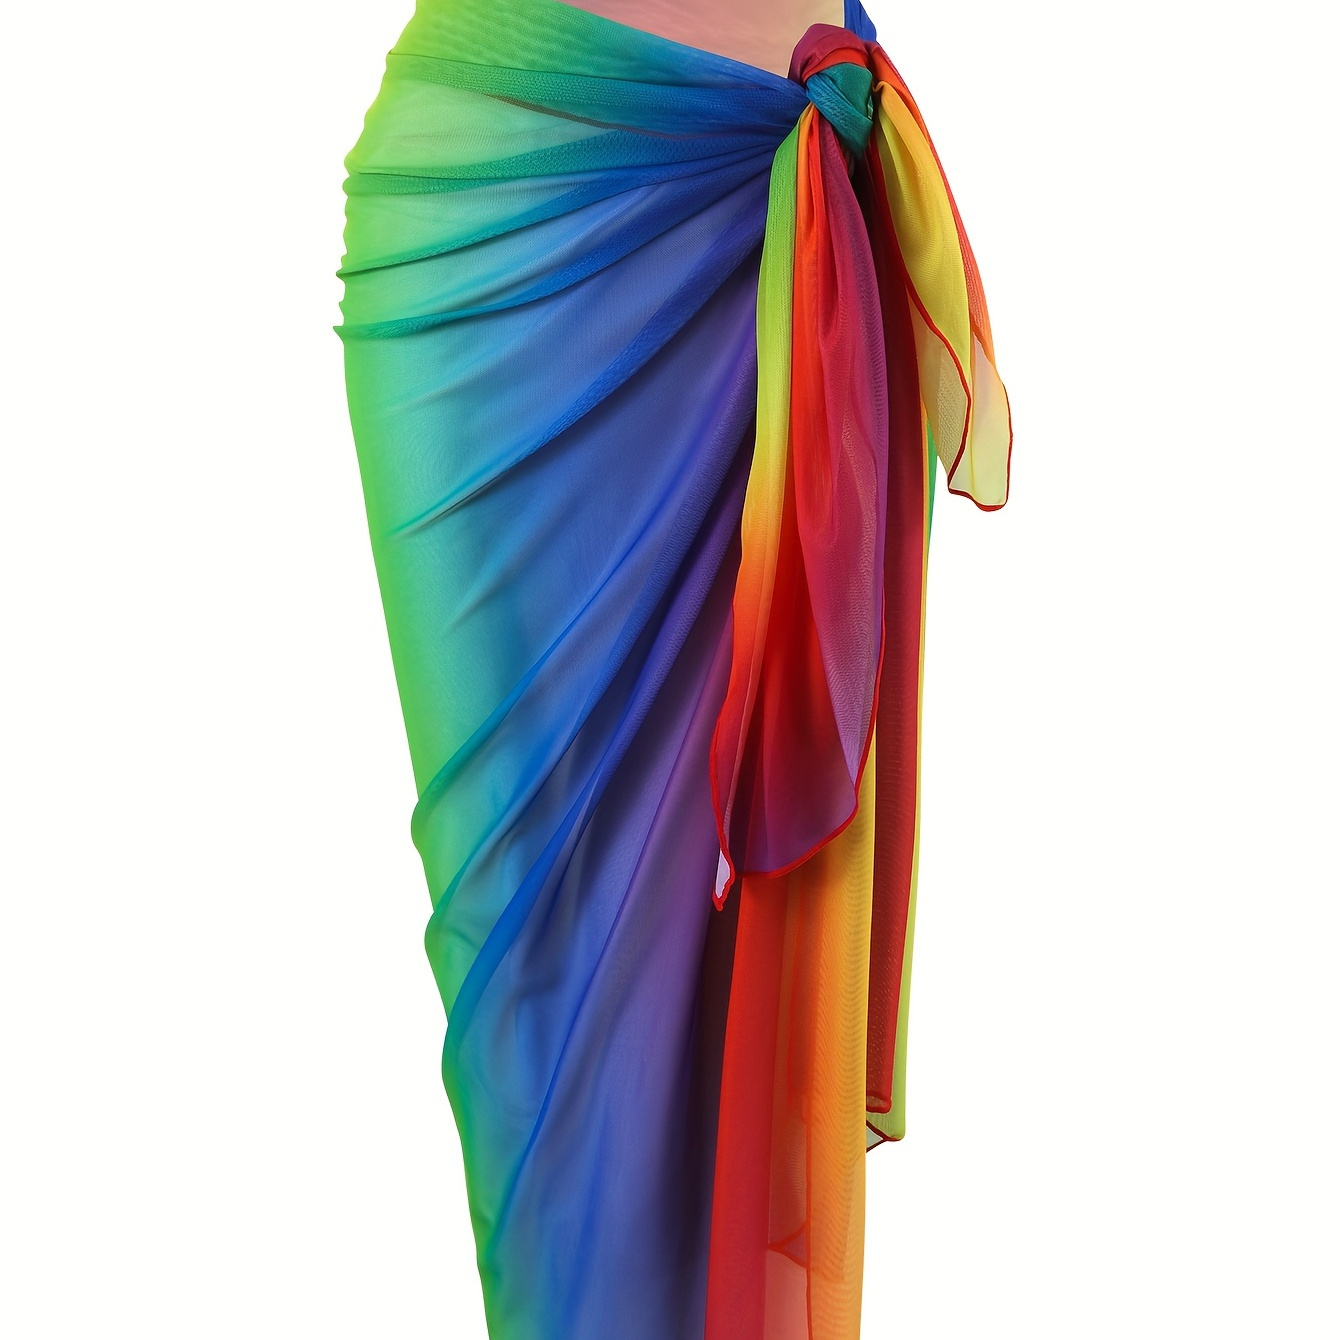 

Women's Fashion Bohemian Style Beach Sarong, Tie-dye Wrap Skirt, Semi-sheer Colorful, Lightweight, Summer Cover-up